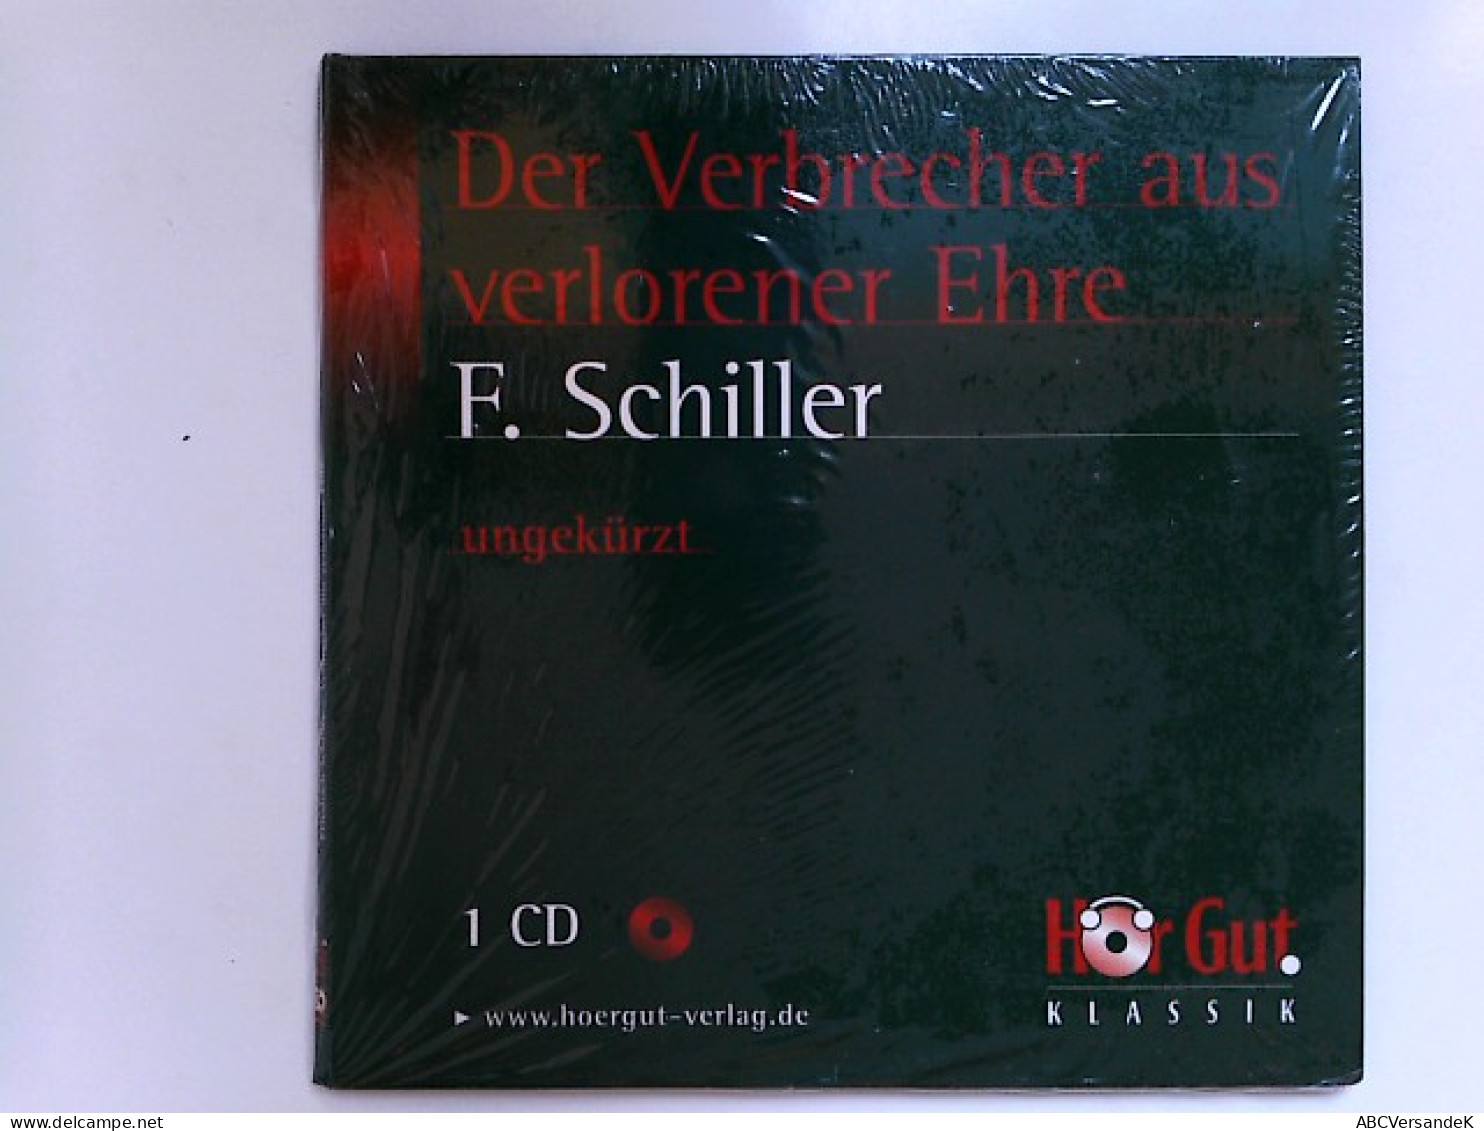 Verbrecher Aus Verlorener Ehre. CD - CDs